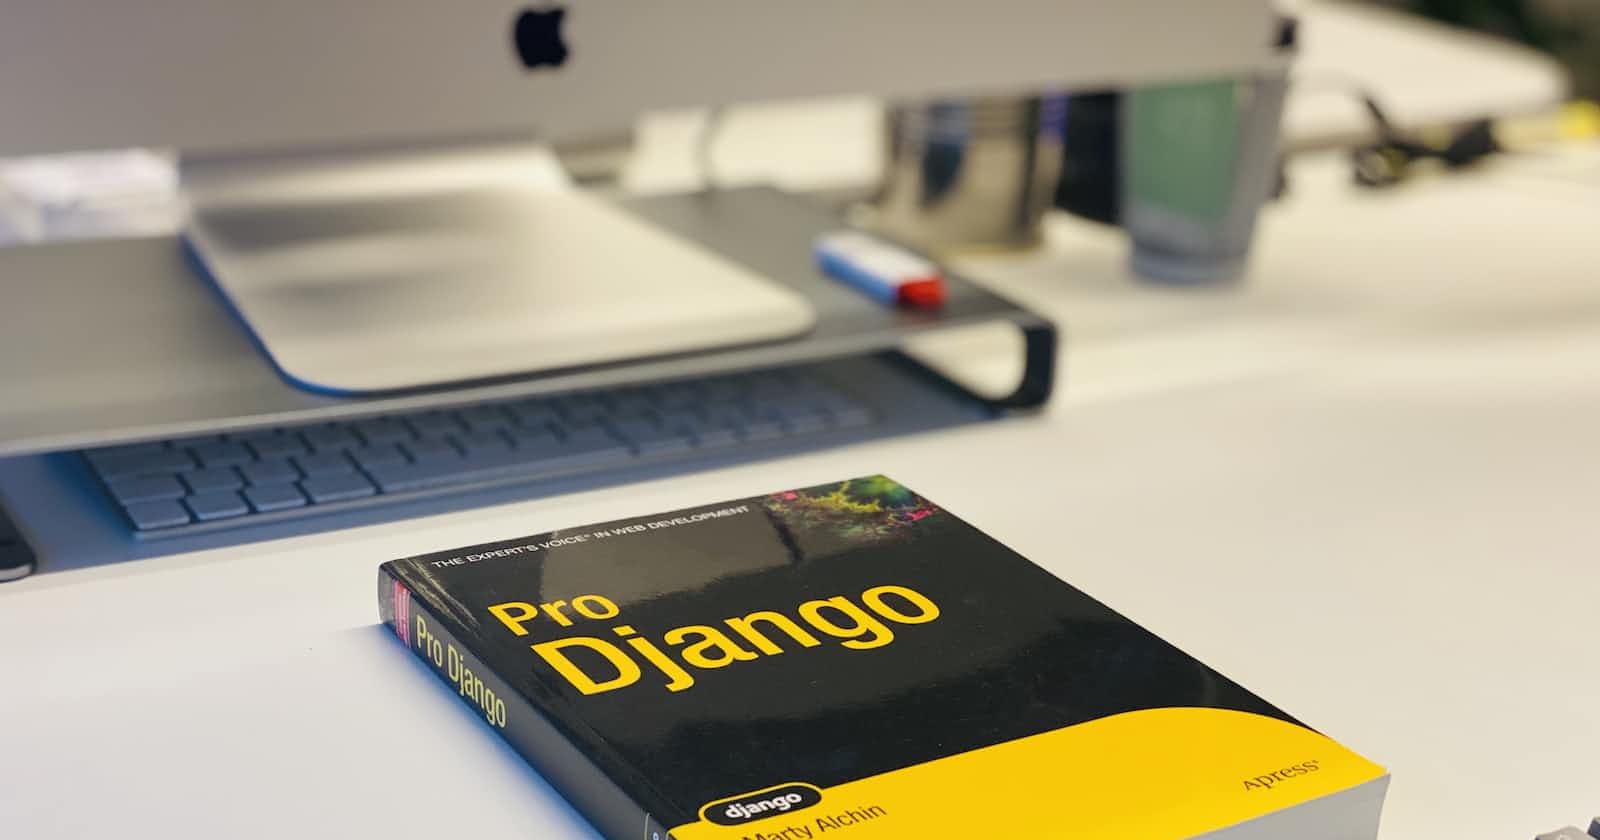 Getting Started with Django